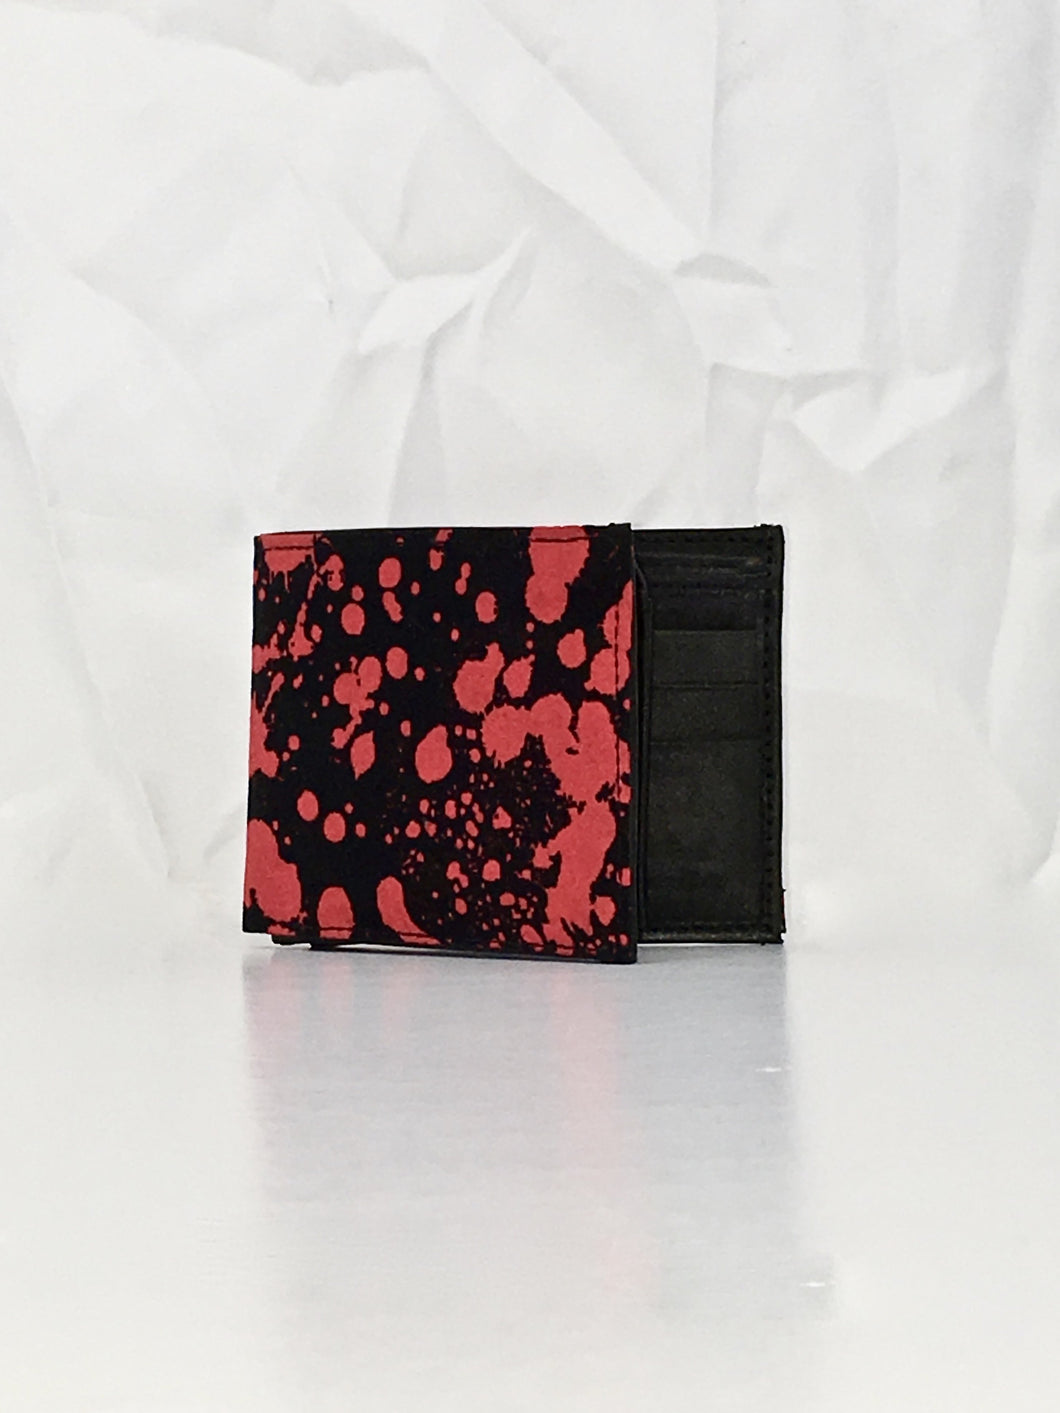 Classic horror film blood splatter handcrafted billfold wallet